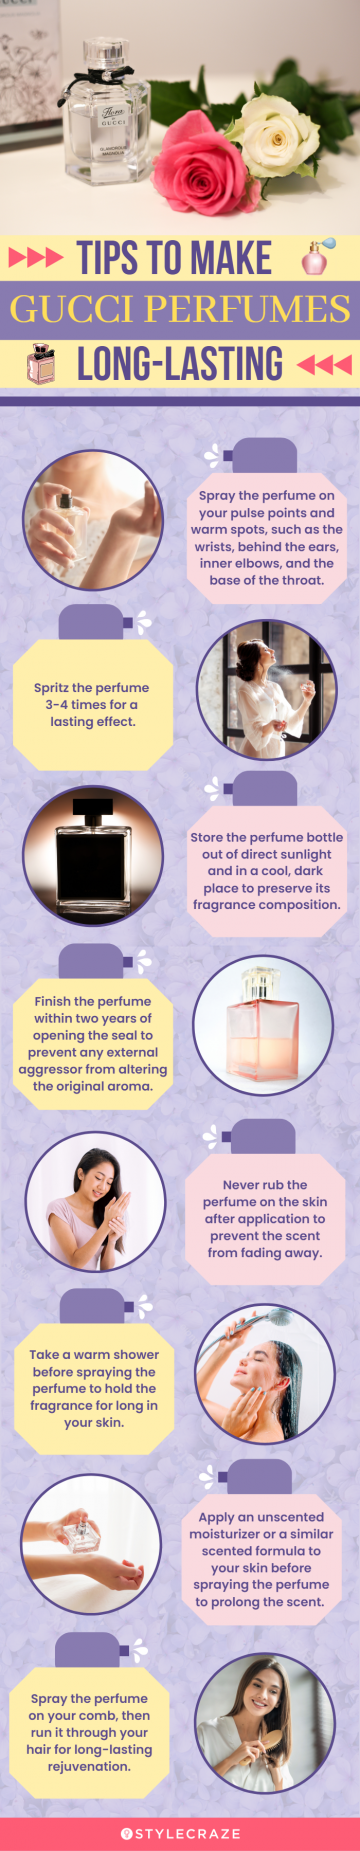 Tips Make To Gucci Perfume Long-Lasting